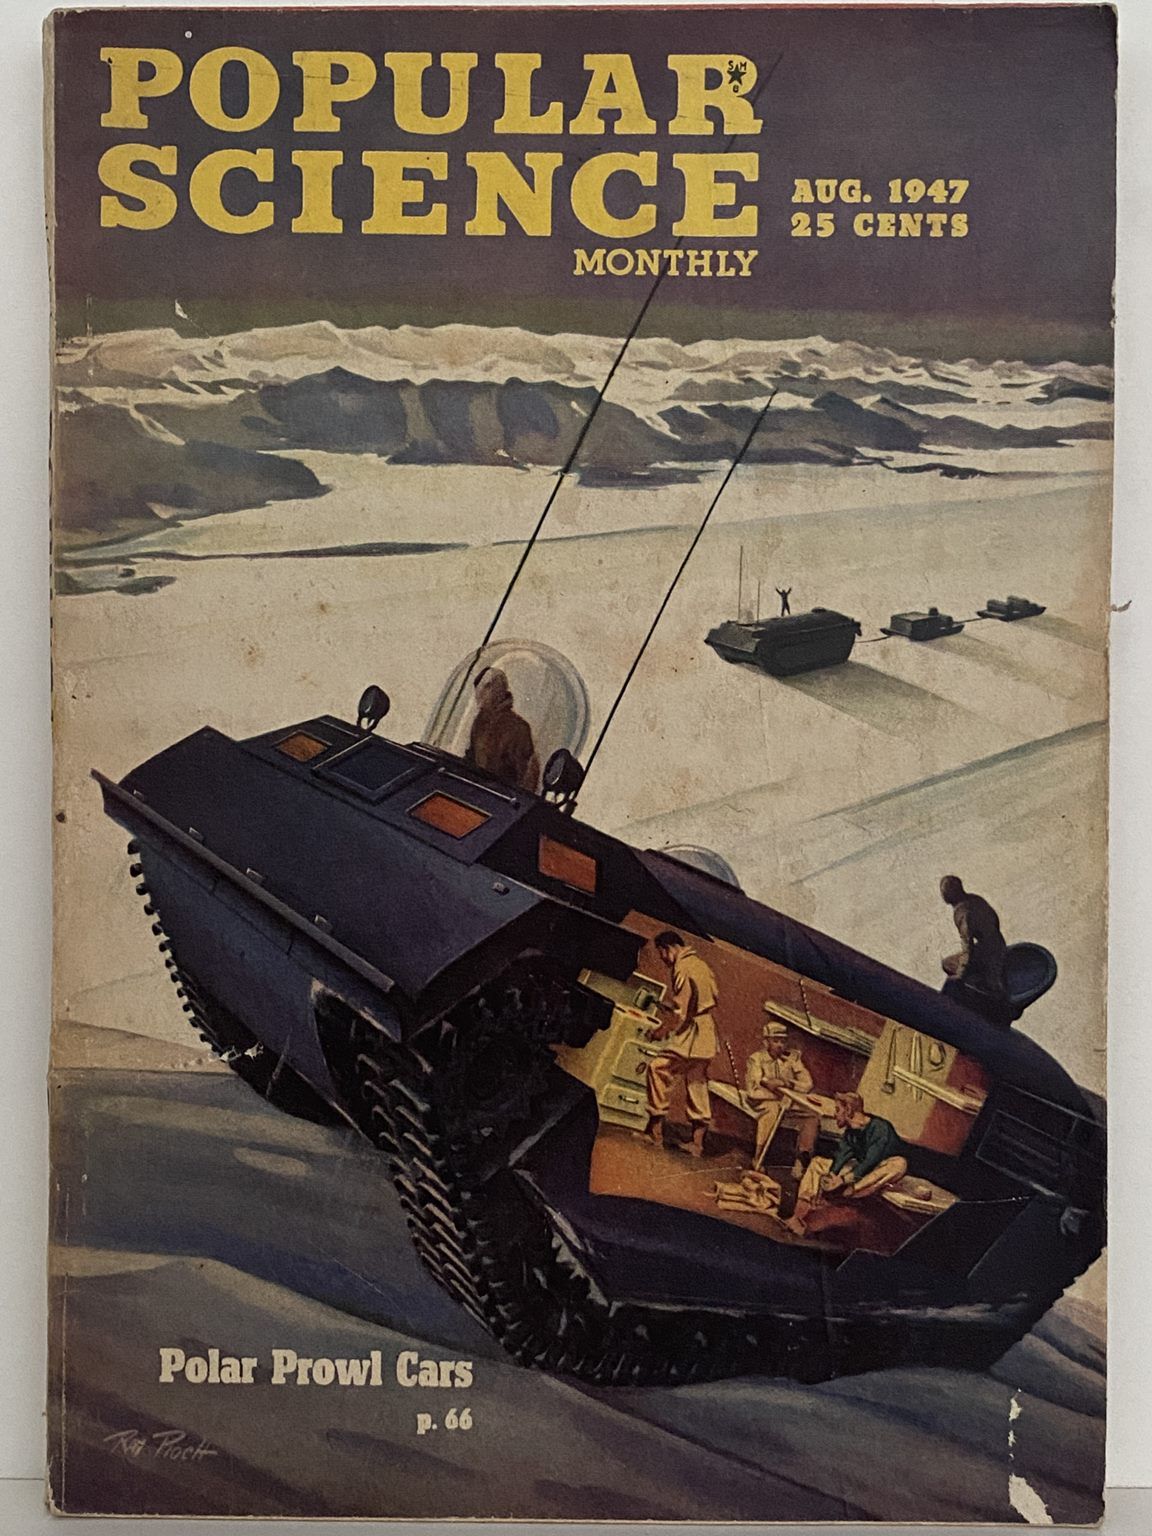 VINTAGE MAGAZINE: Popular Science, Vol. 151, No. 2 - August 1947